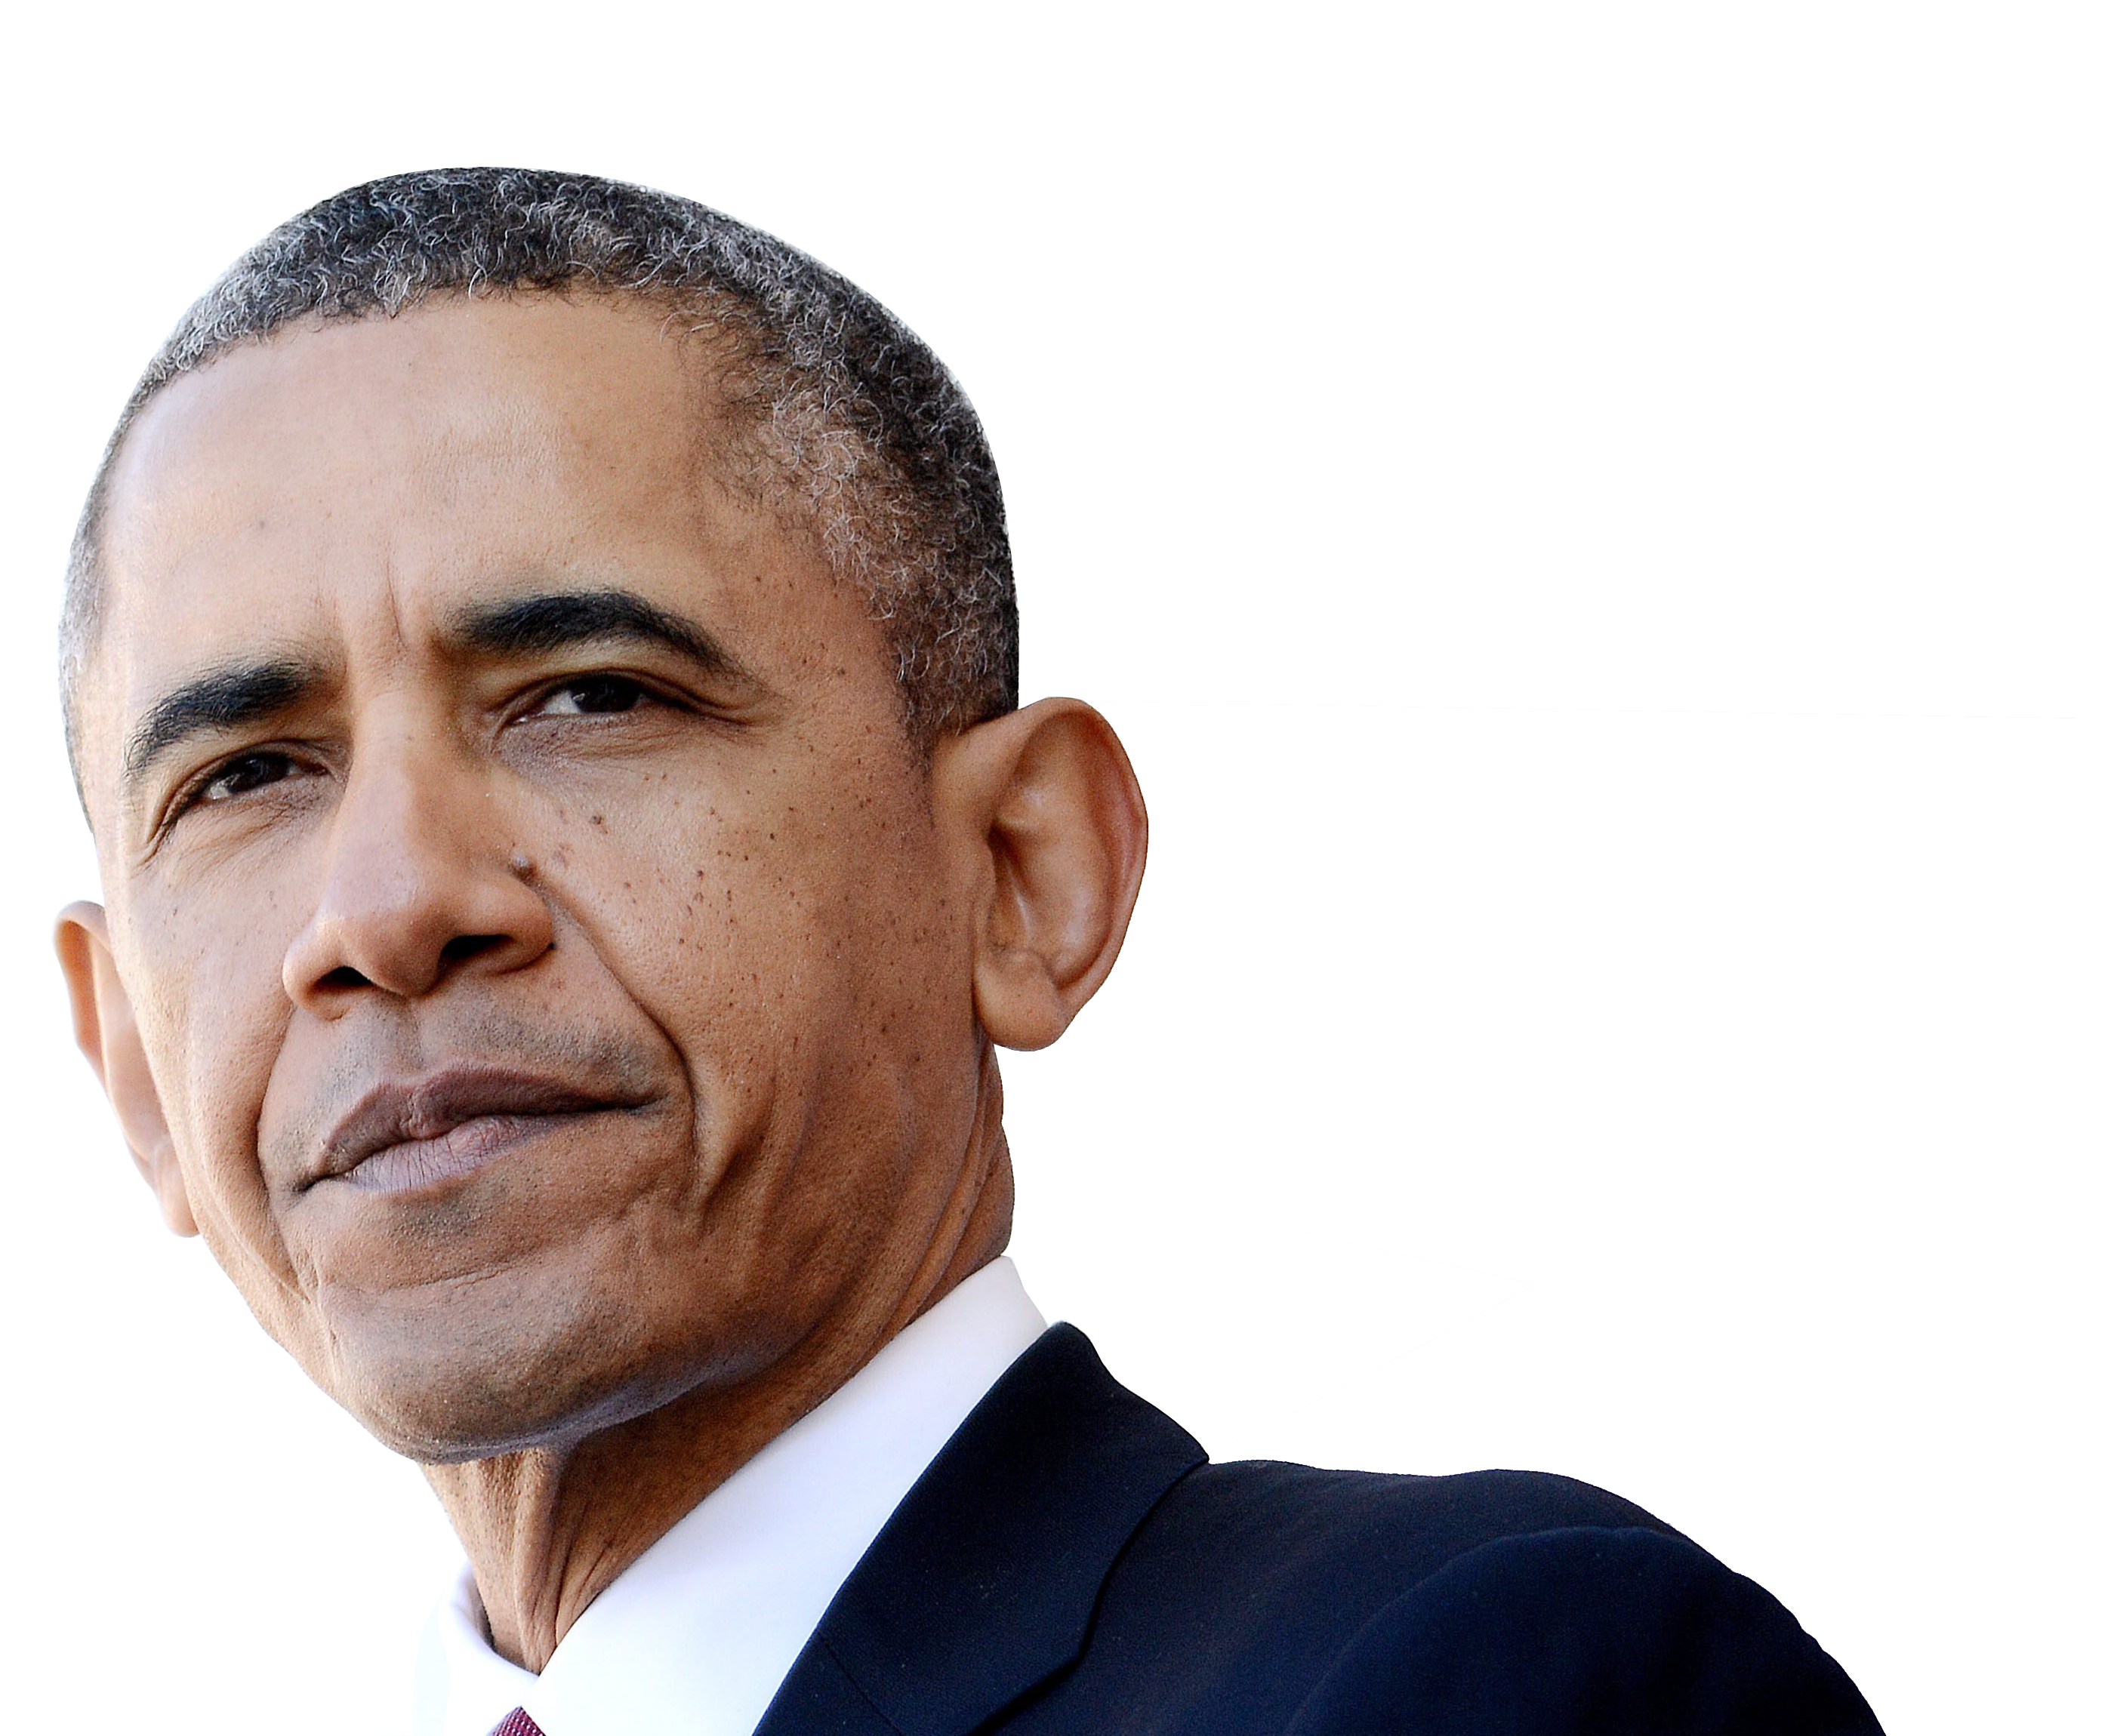 Barack Face Closeup Obama PNG Free Photo PNG Image